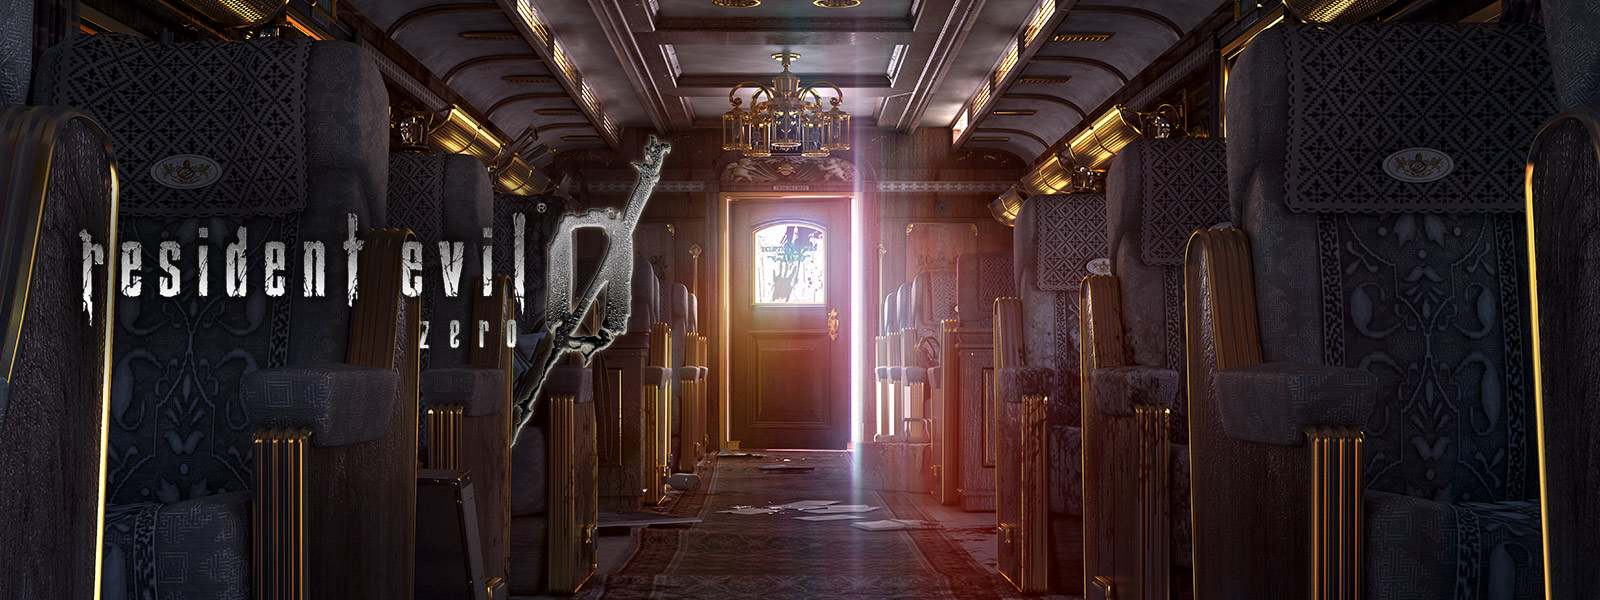 Resident Evil 0, στιγμιότυπο από το εσωτερικό ενός φανταχτερού βαγονιού